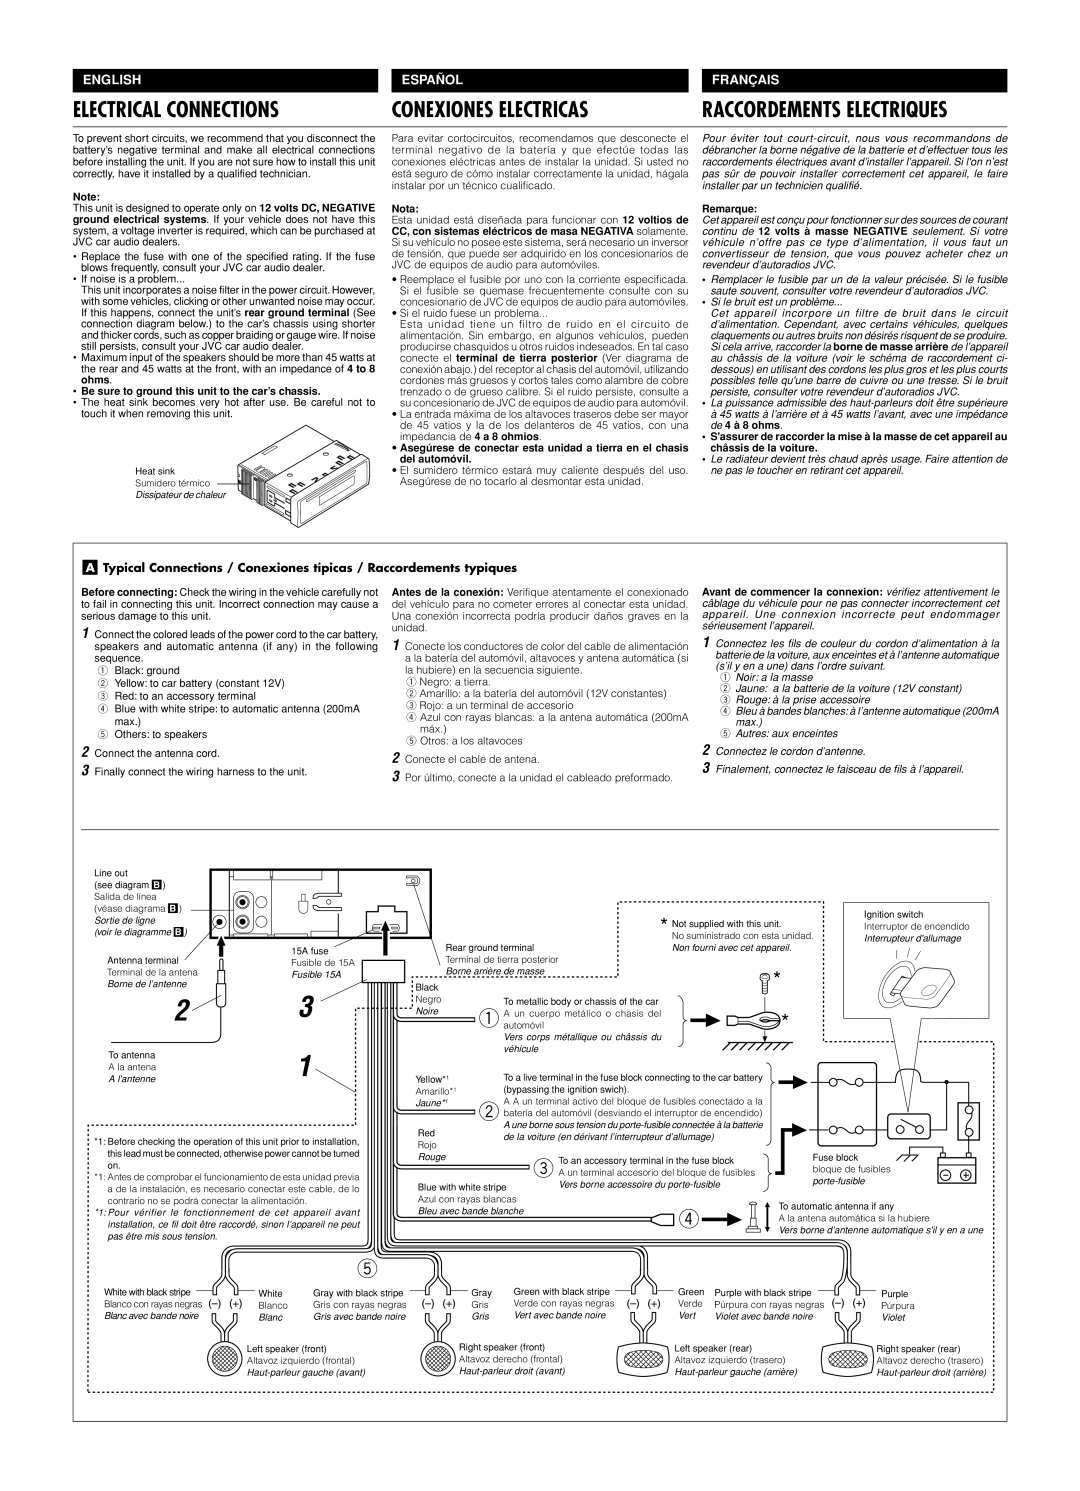 JVC KD-S670 manual Electrical Connections, Conexiones Electricas, English, Español, Nota 